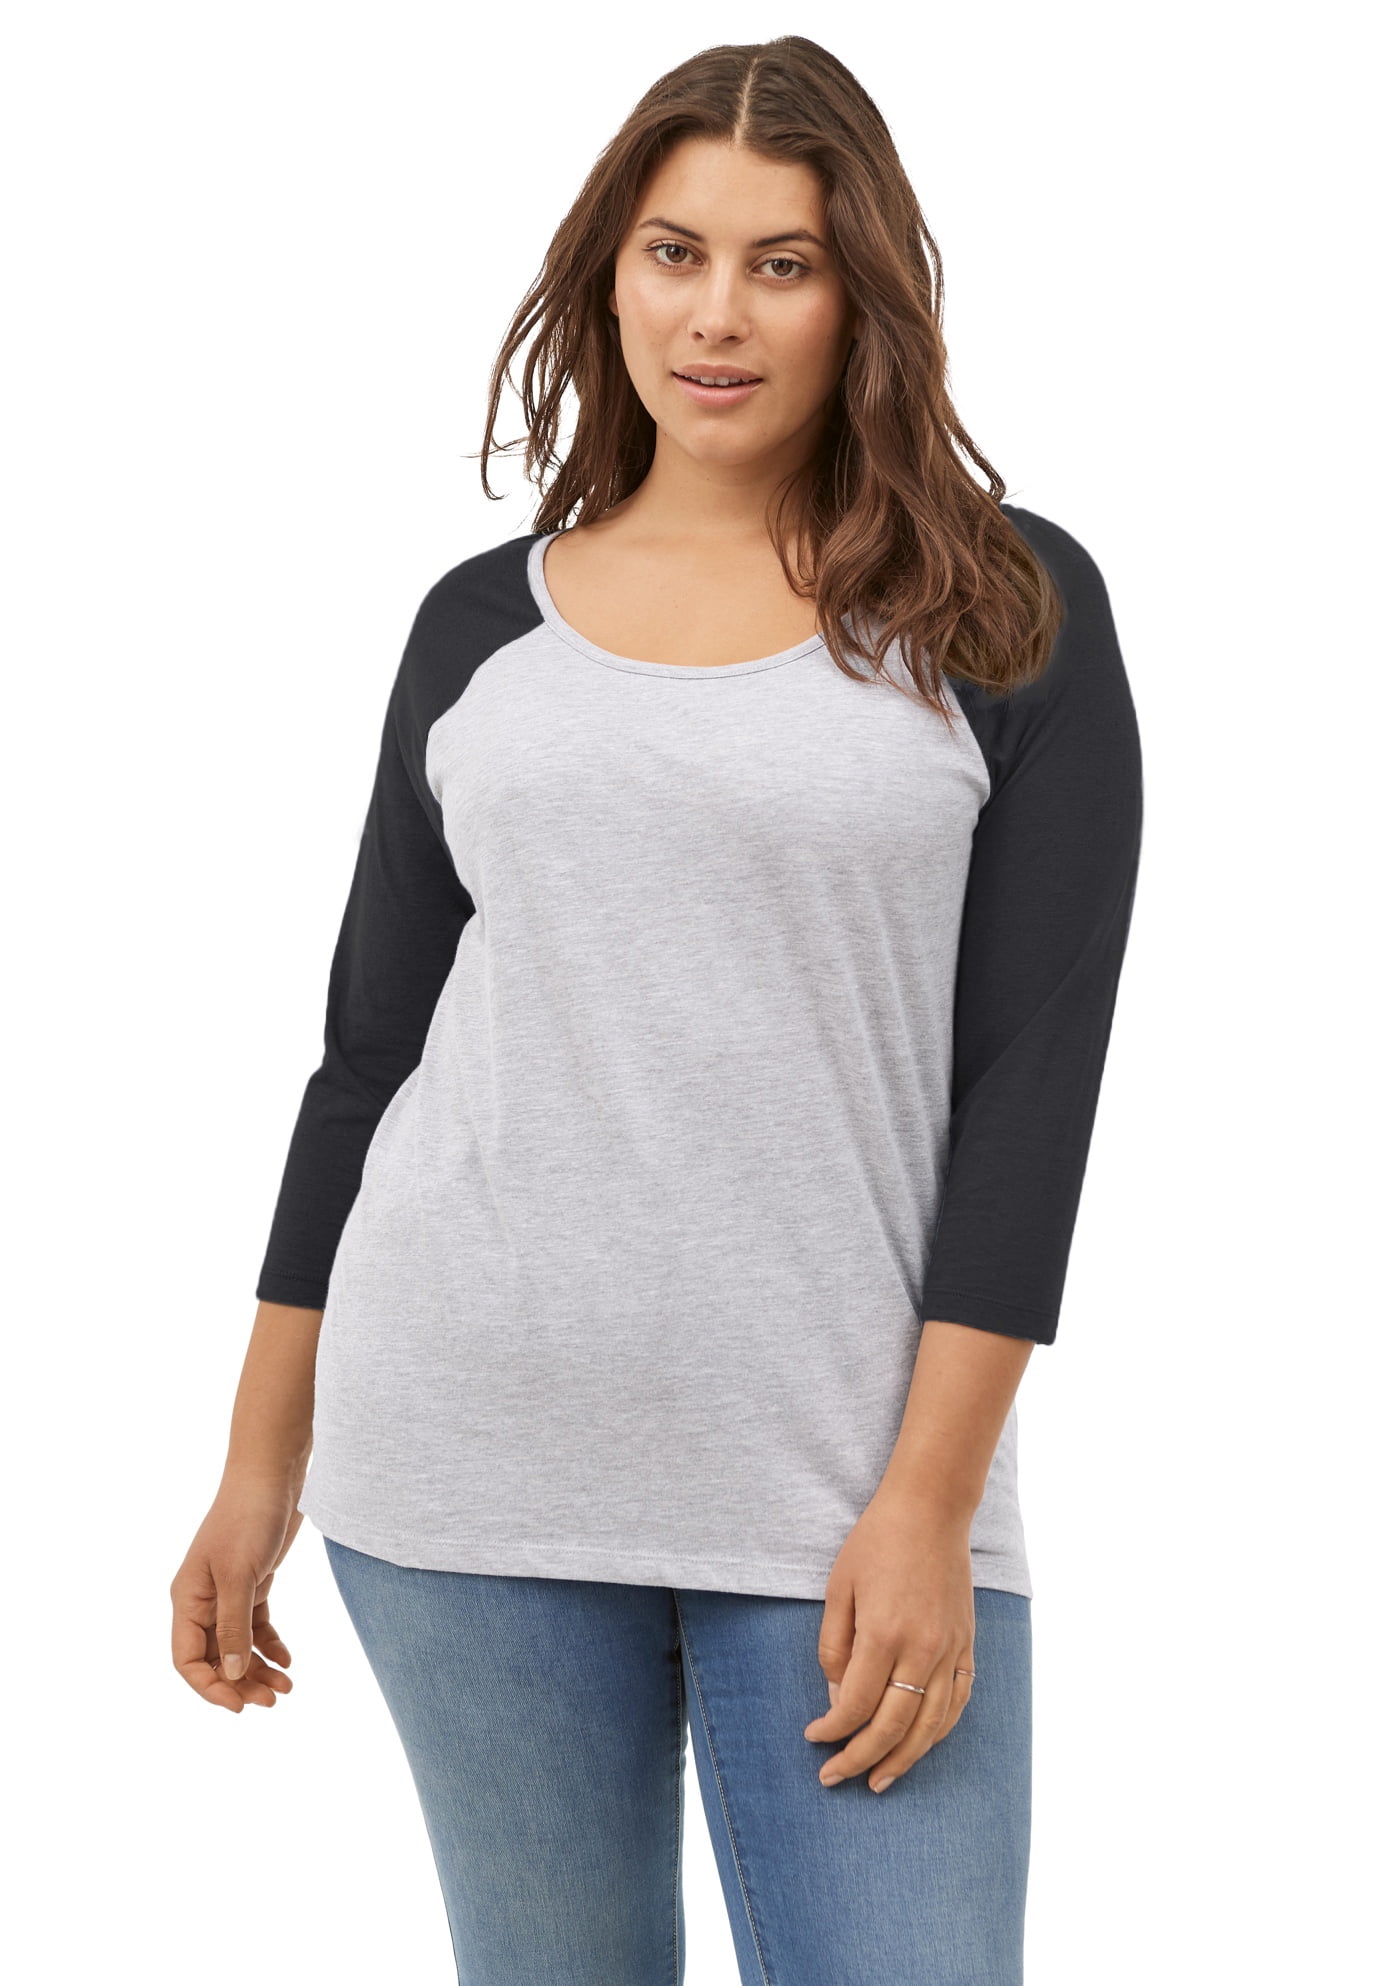 Ellos - ellos Women's Plus Size Colorblock 3/4 Sleeve Tee T-Shirt - 4X ...